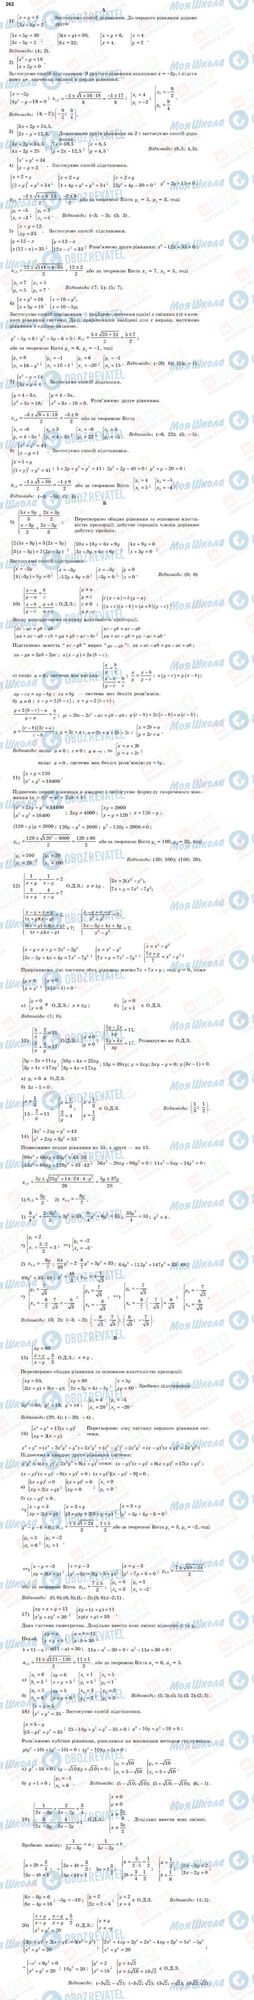 ГДЗ Алгебра 11 клас сторінка 262